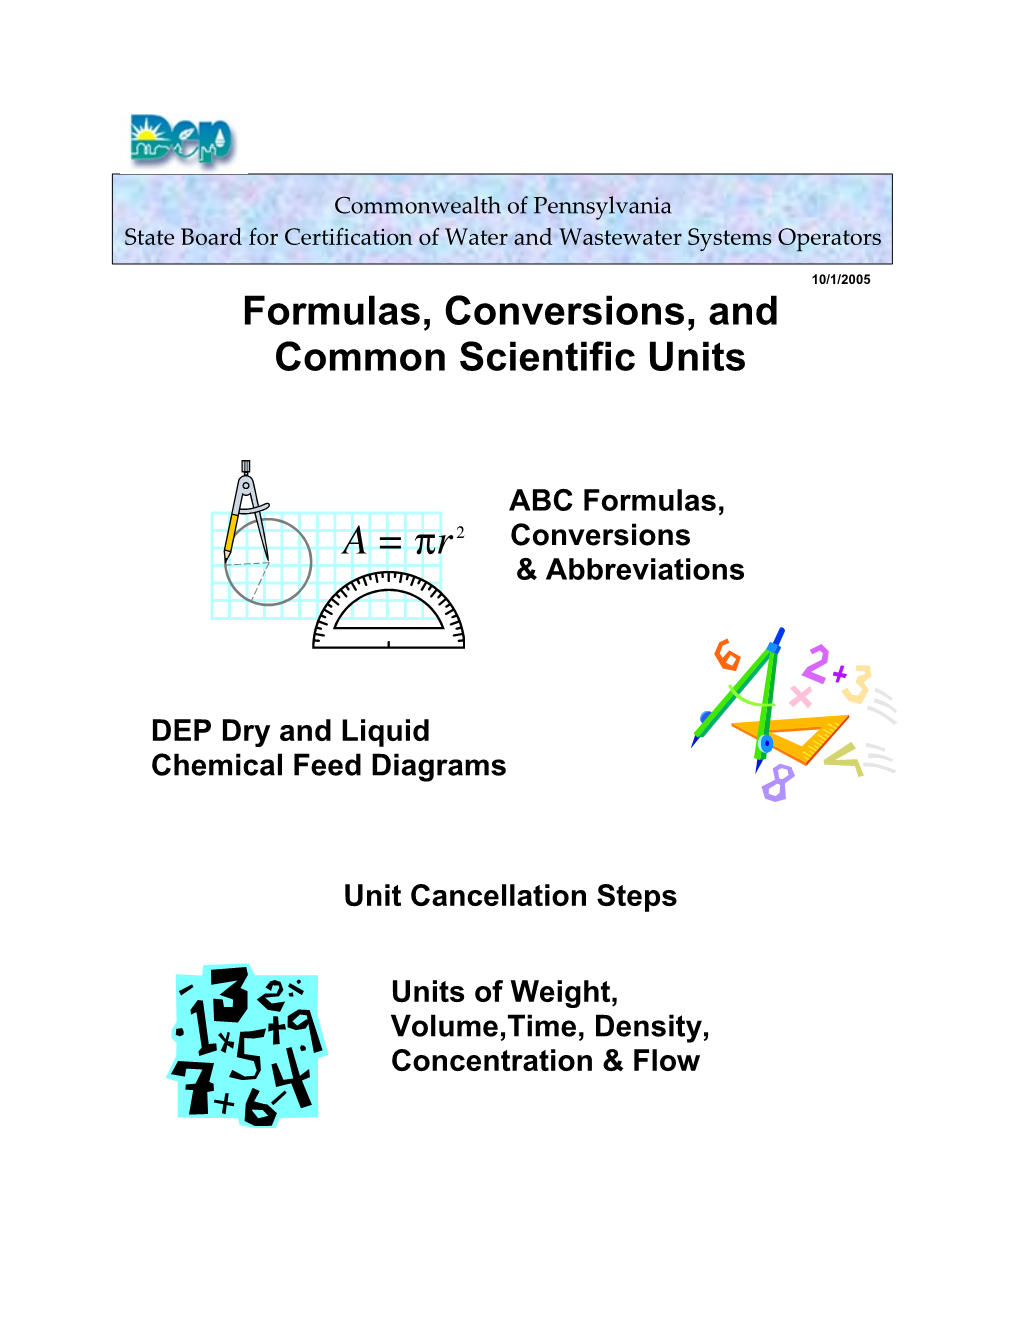 ABC Formulas & Conversions